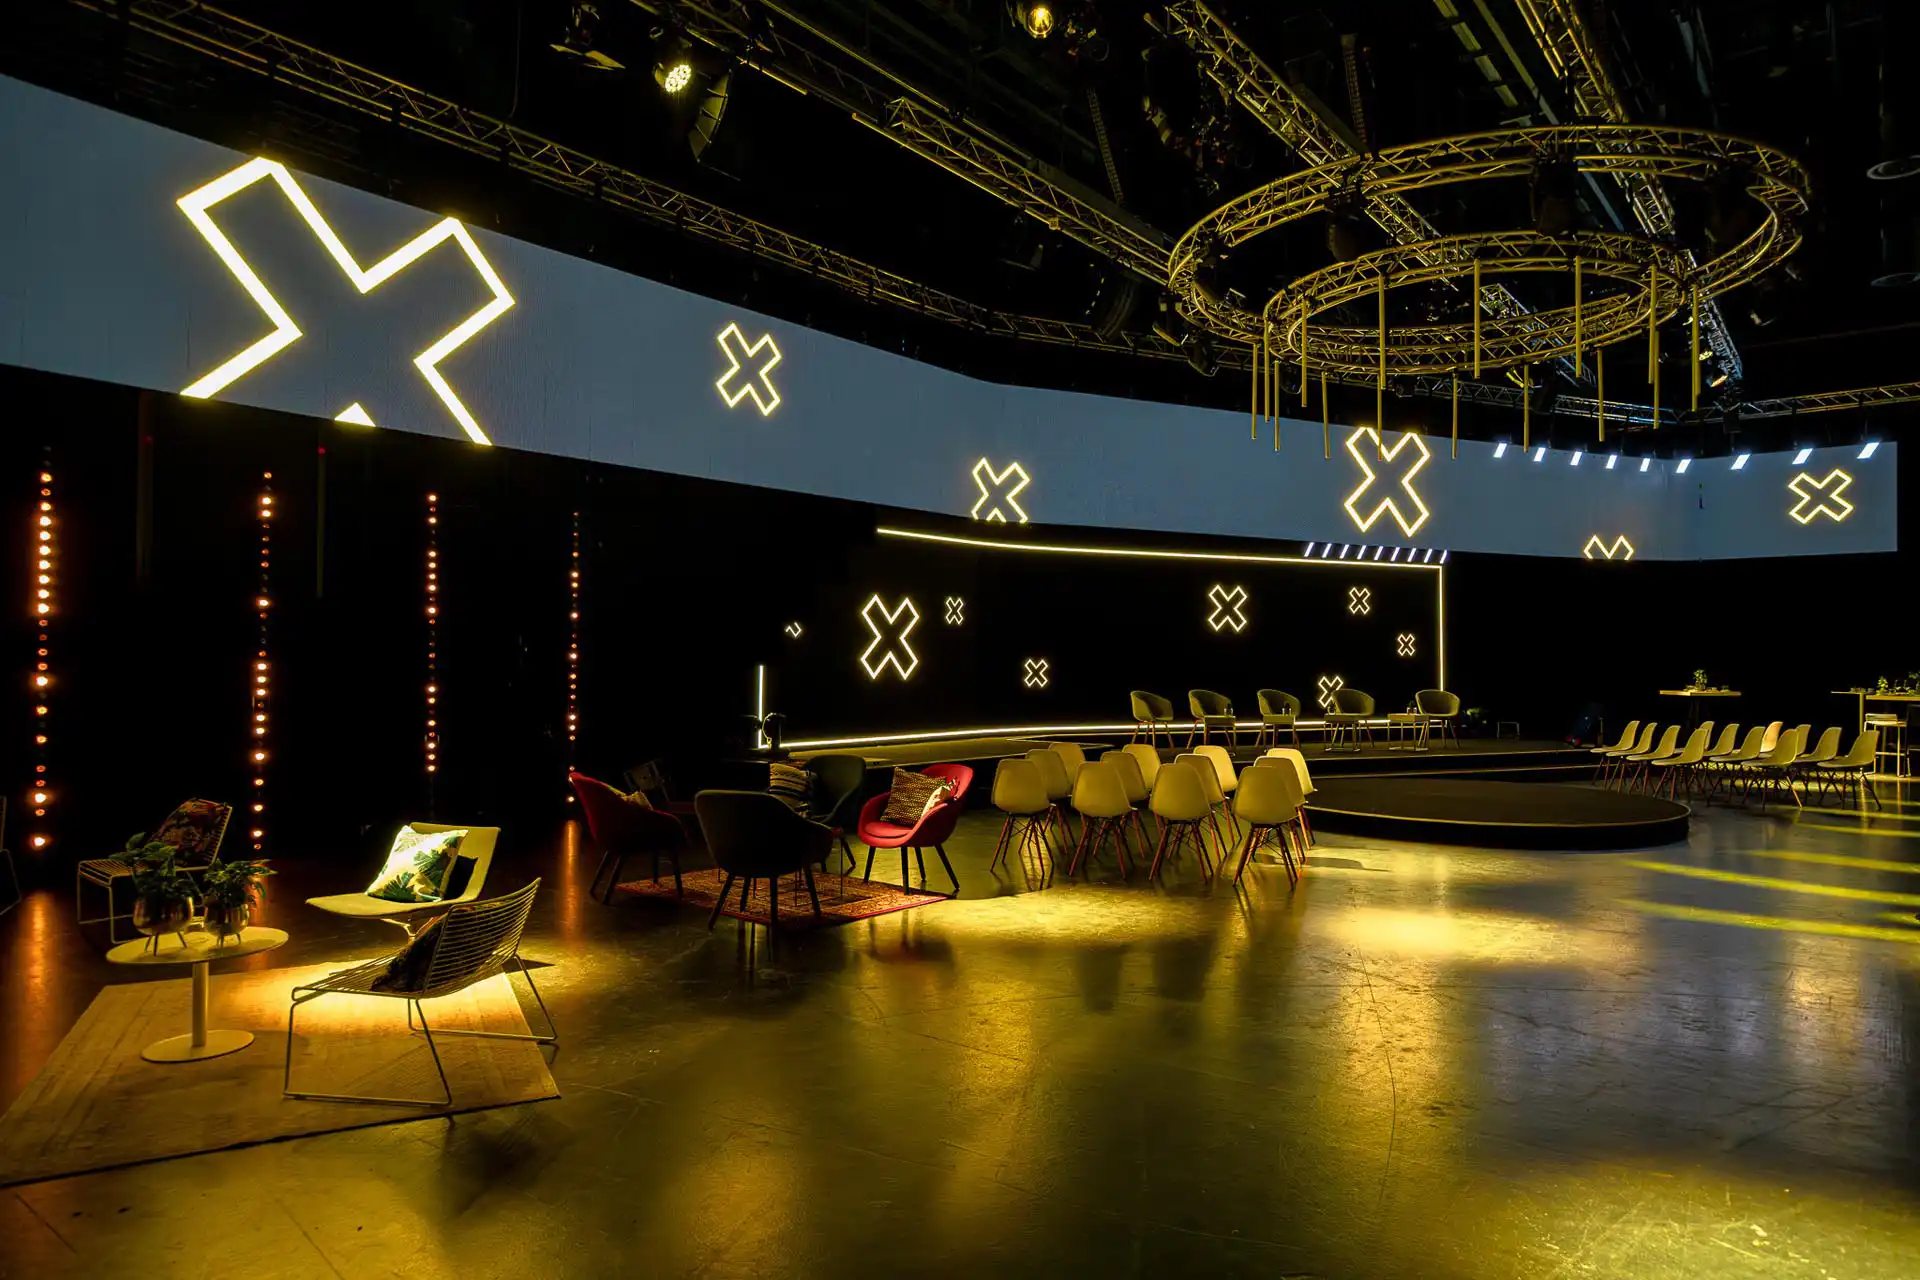 Bühne mit LED Wand, Movinglights und farbiger Beleuchtung show